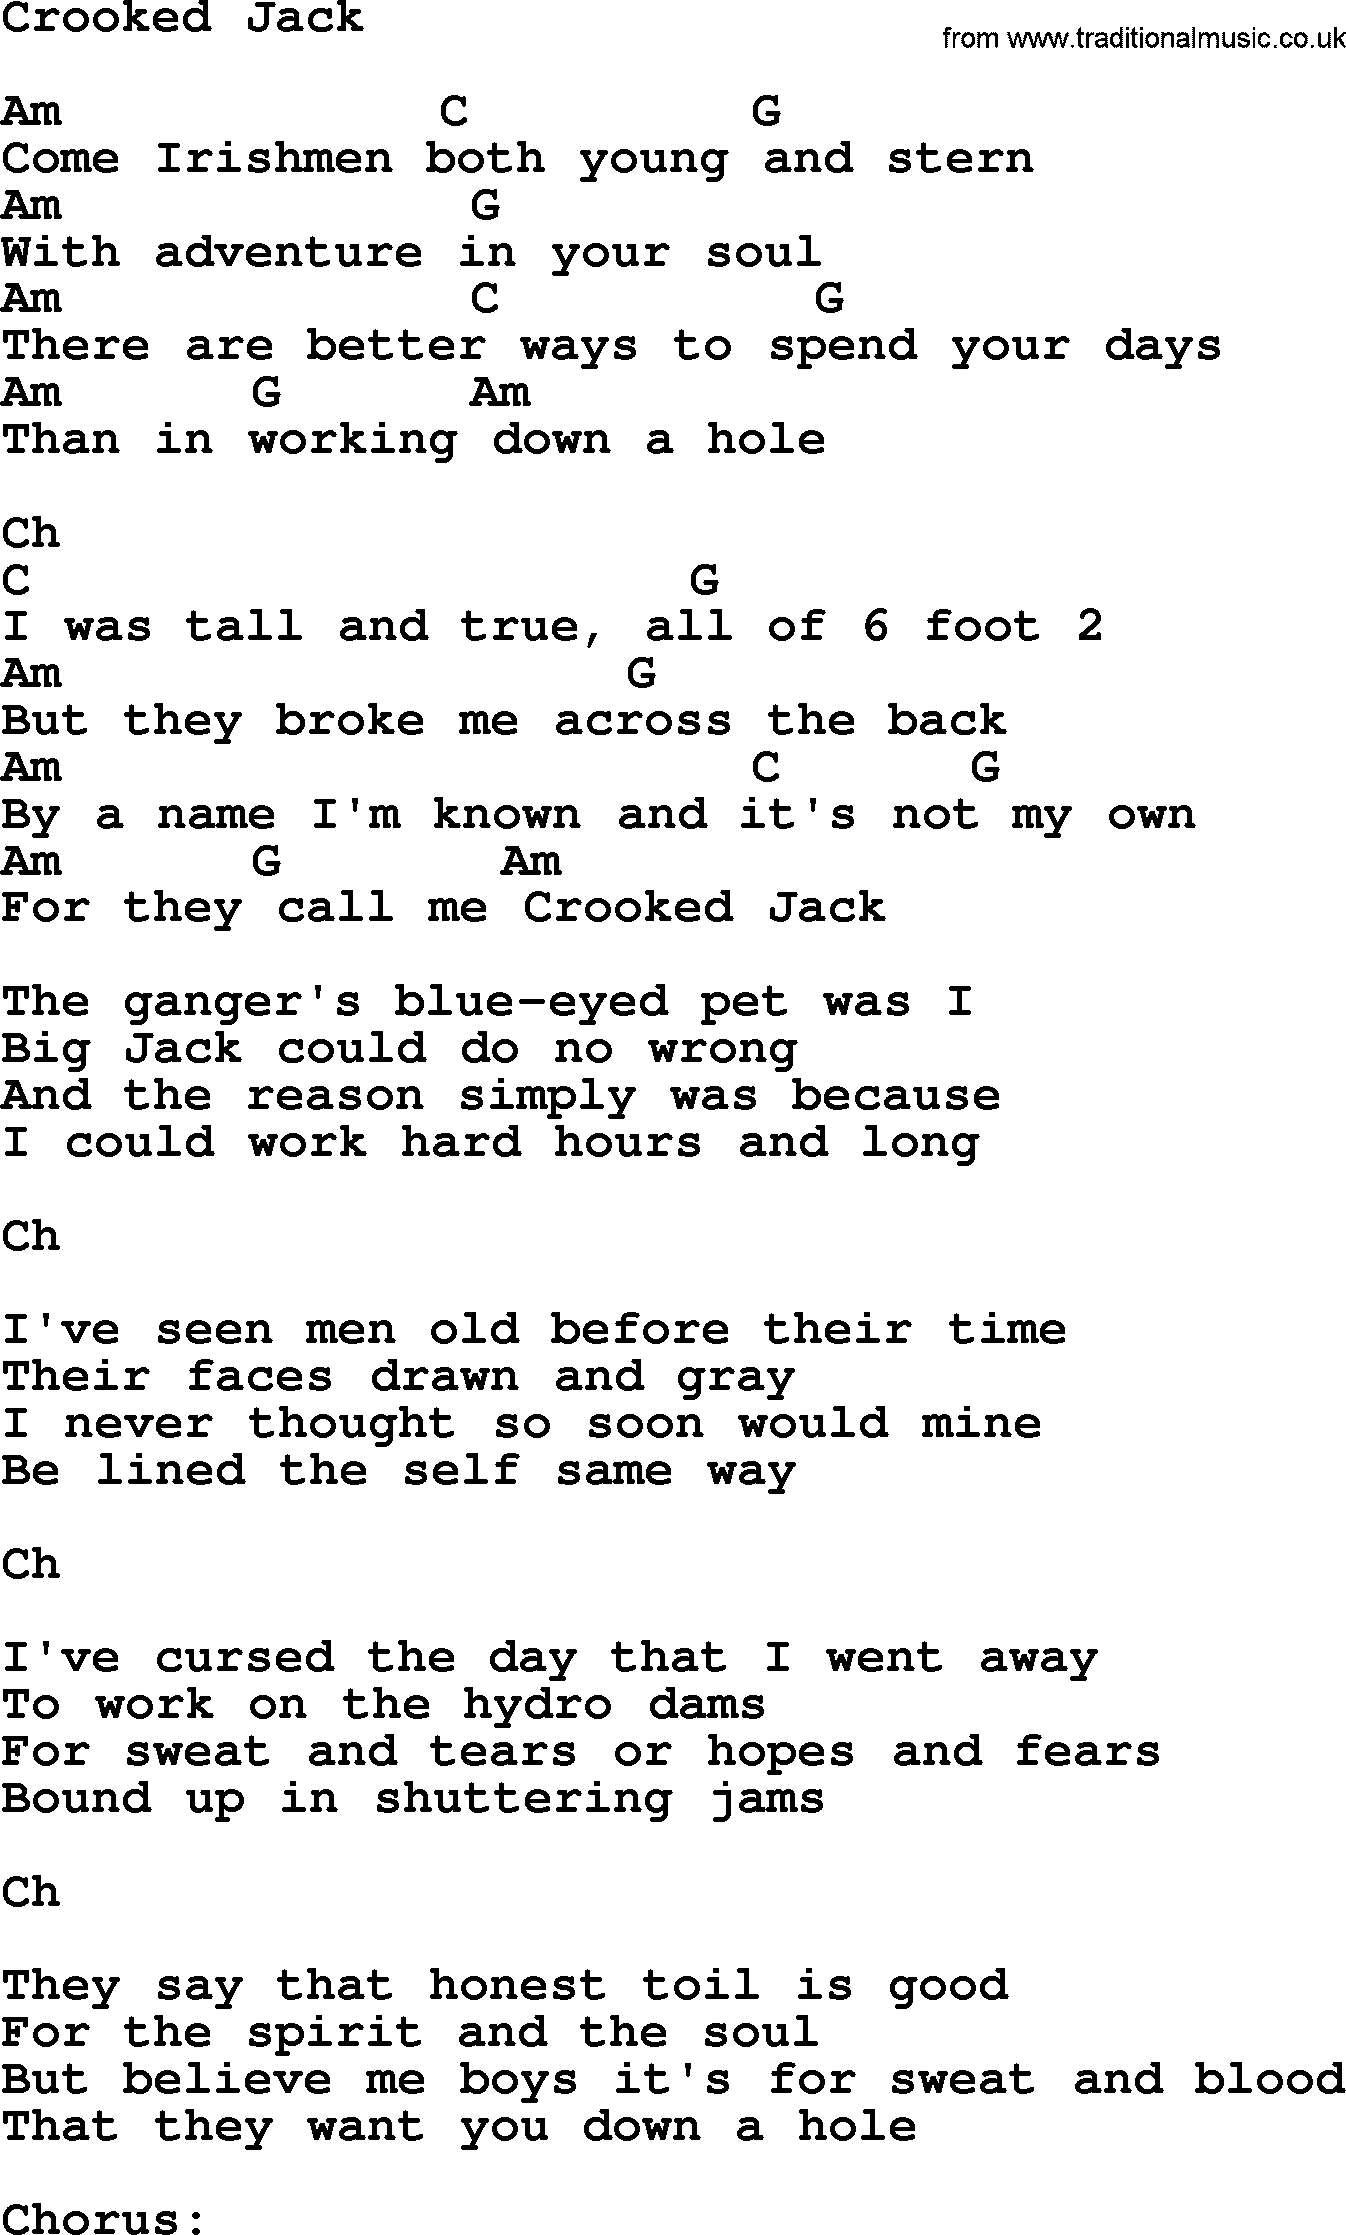 The Dubliners song: Crooked Jack, lyrics